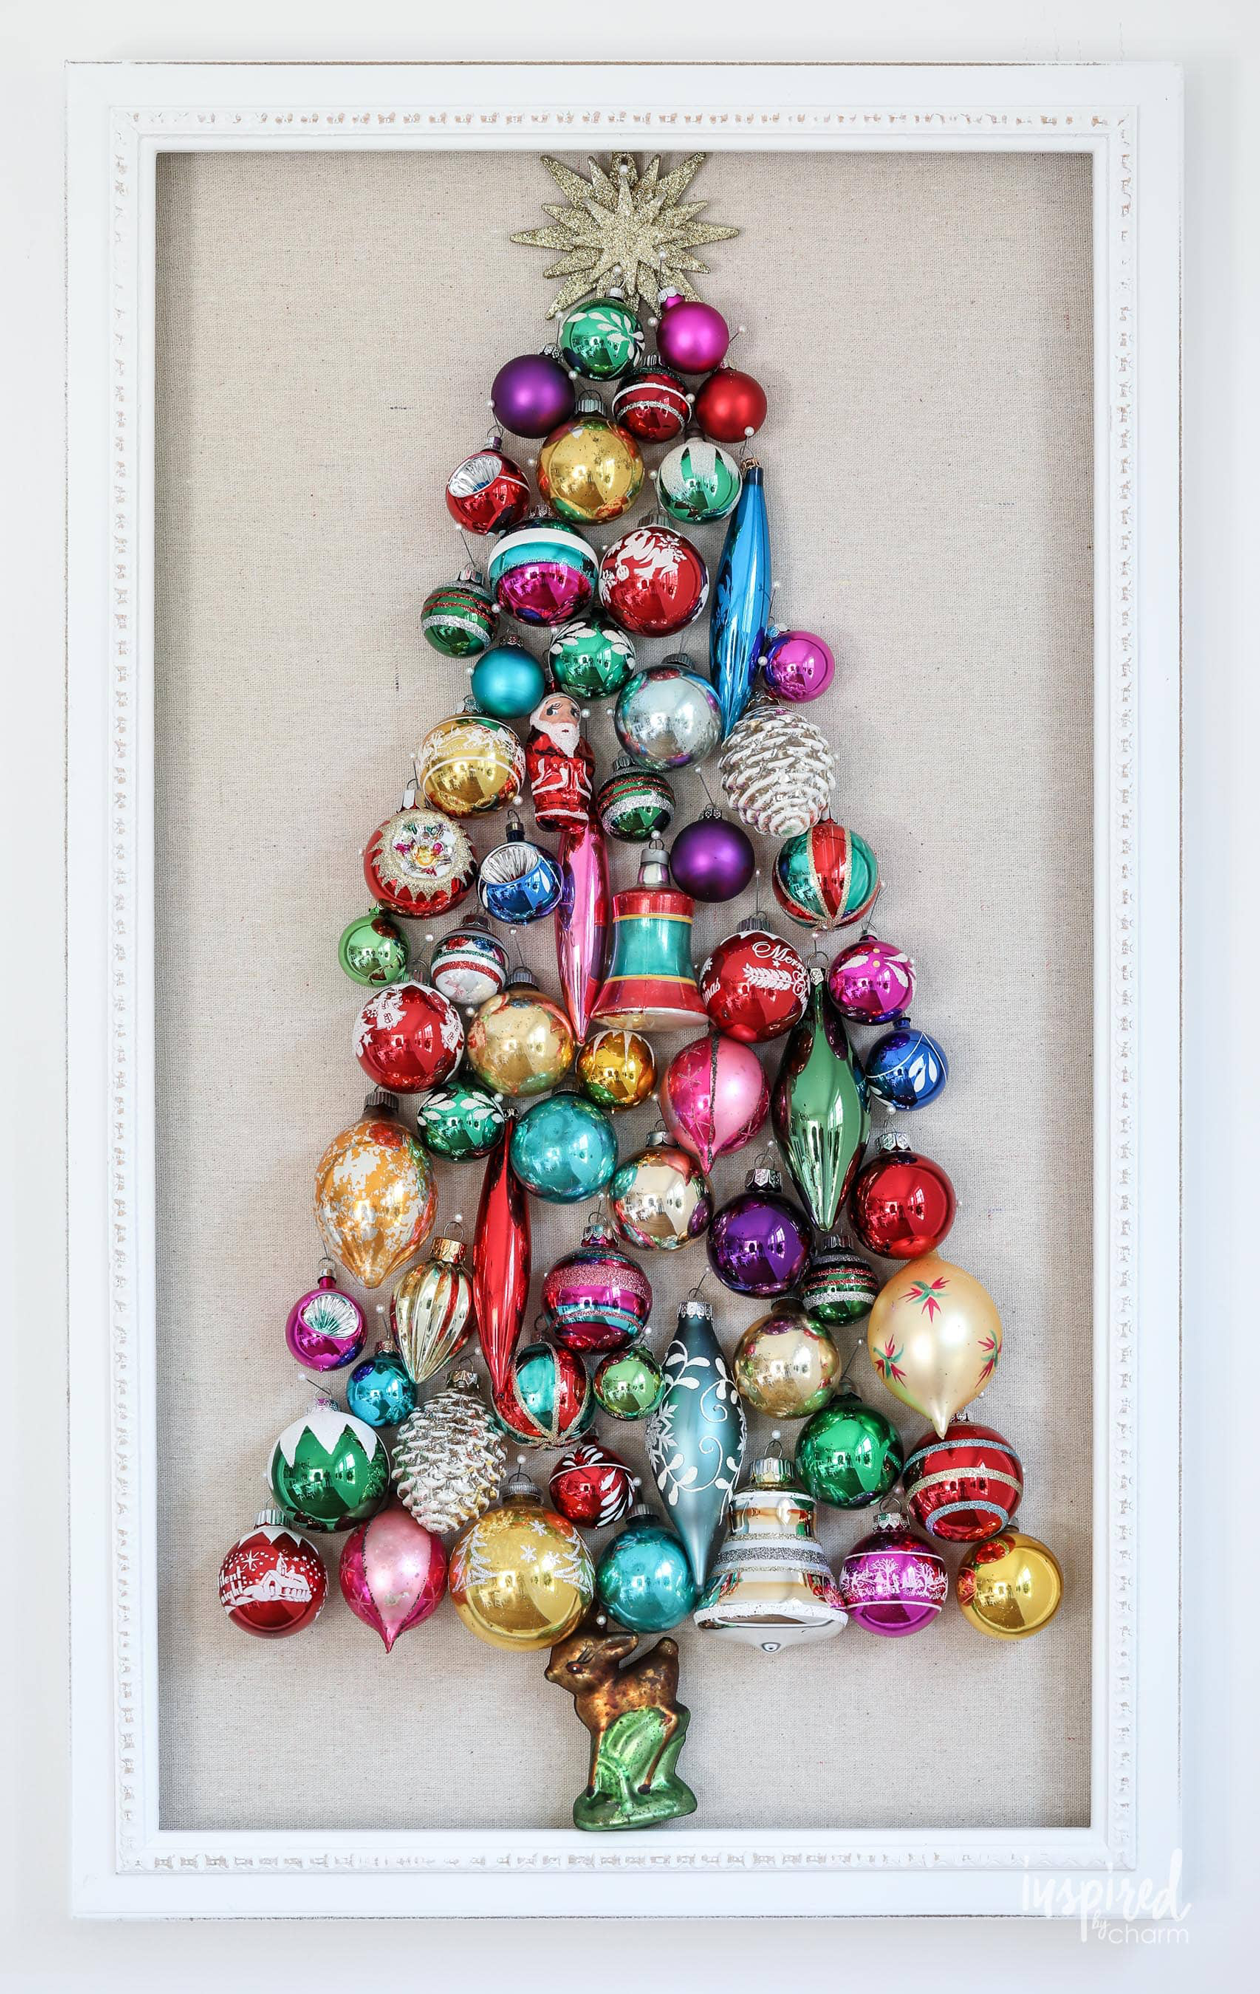 10 DIY Christmas Decorations